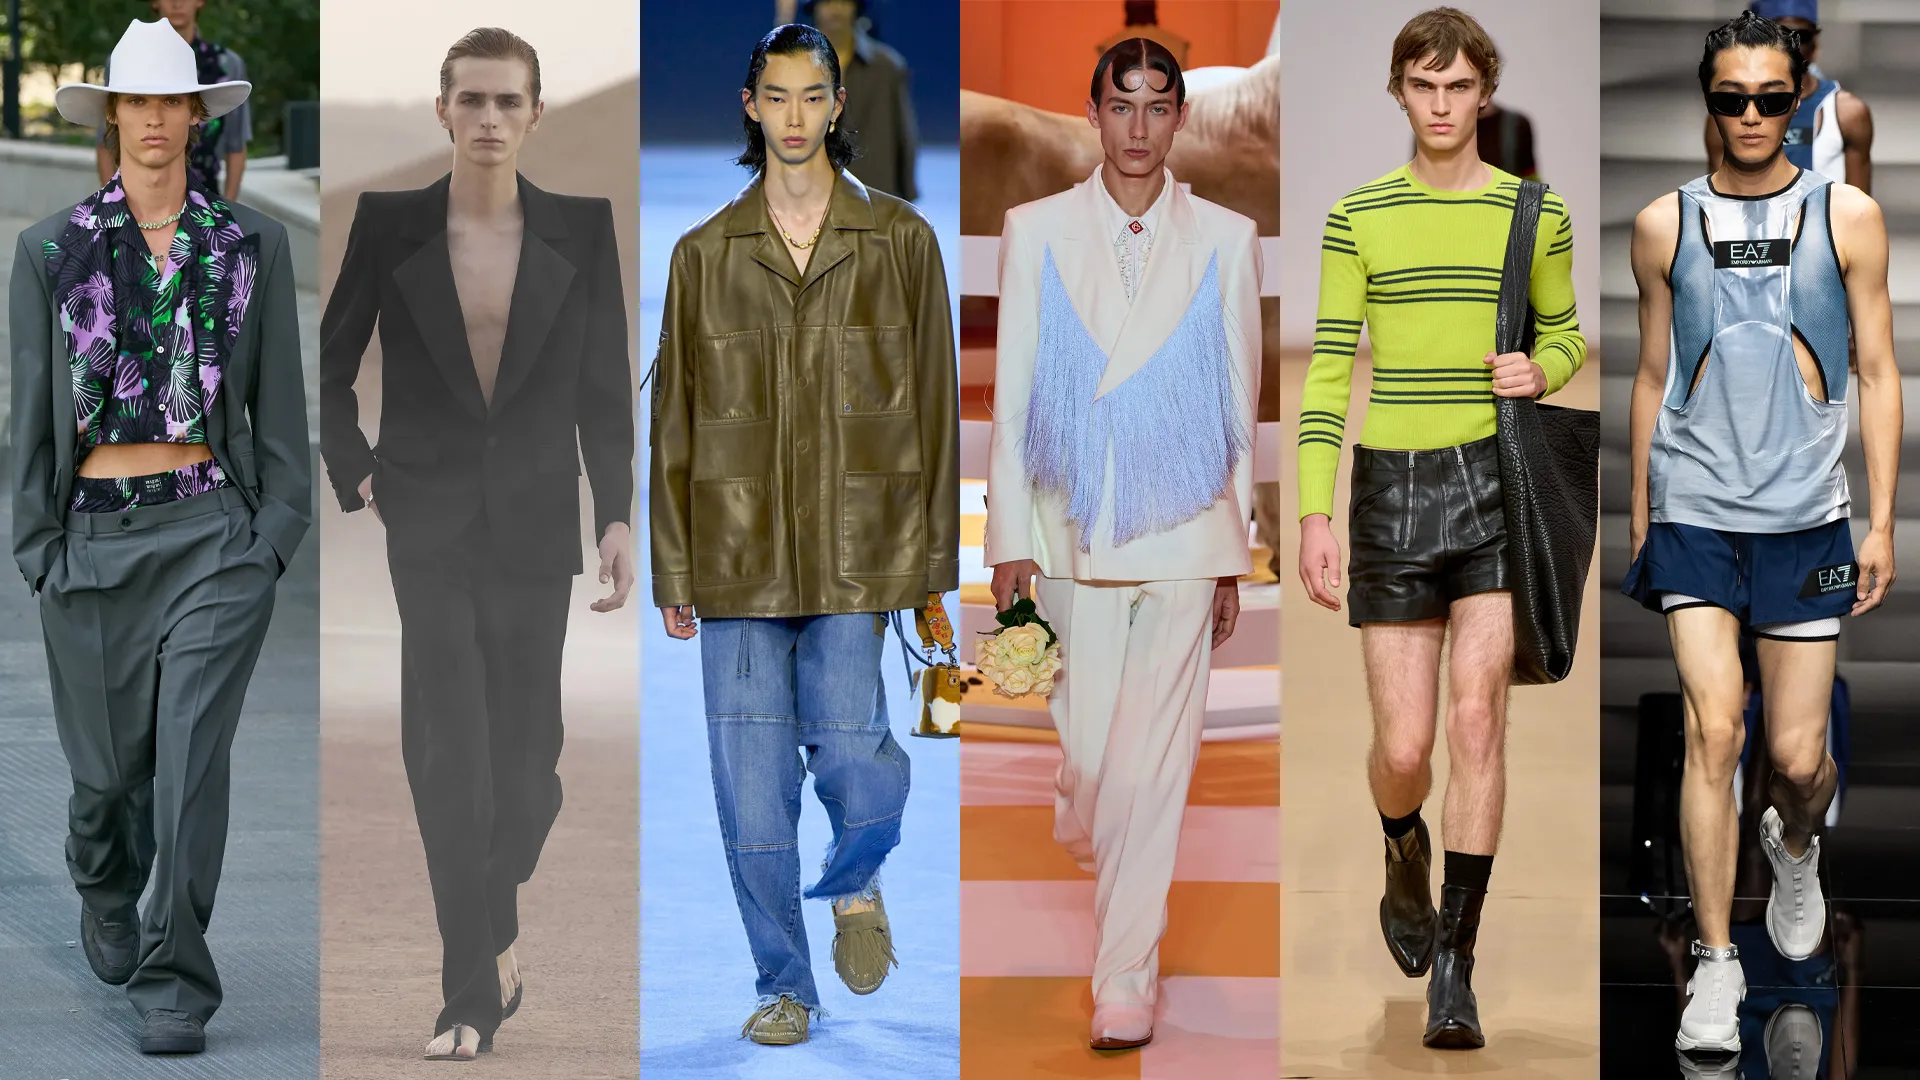 “Global Influences: How Cultural Diversity Shapes Men’s Fashion Statements”